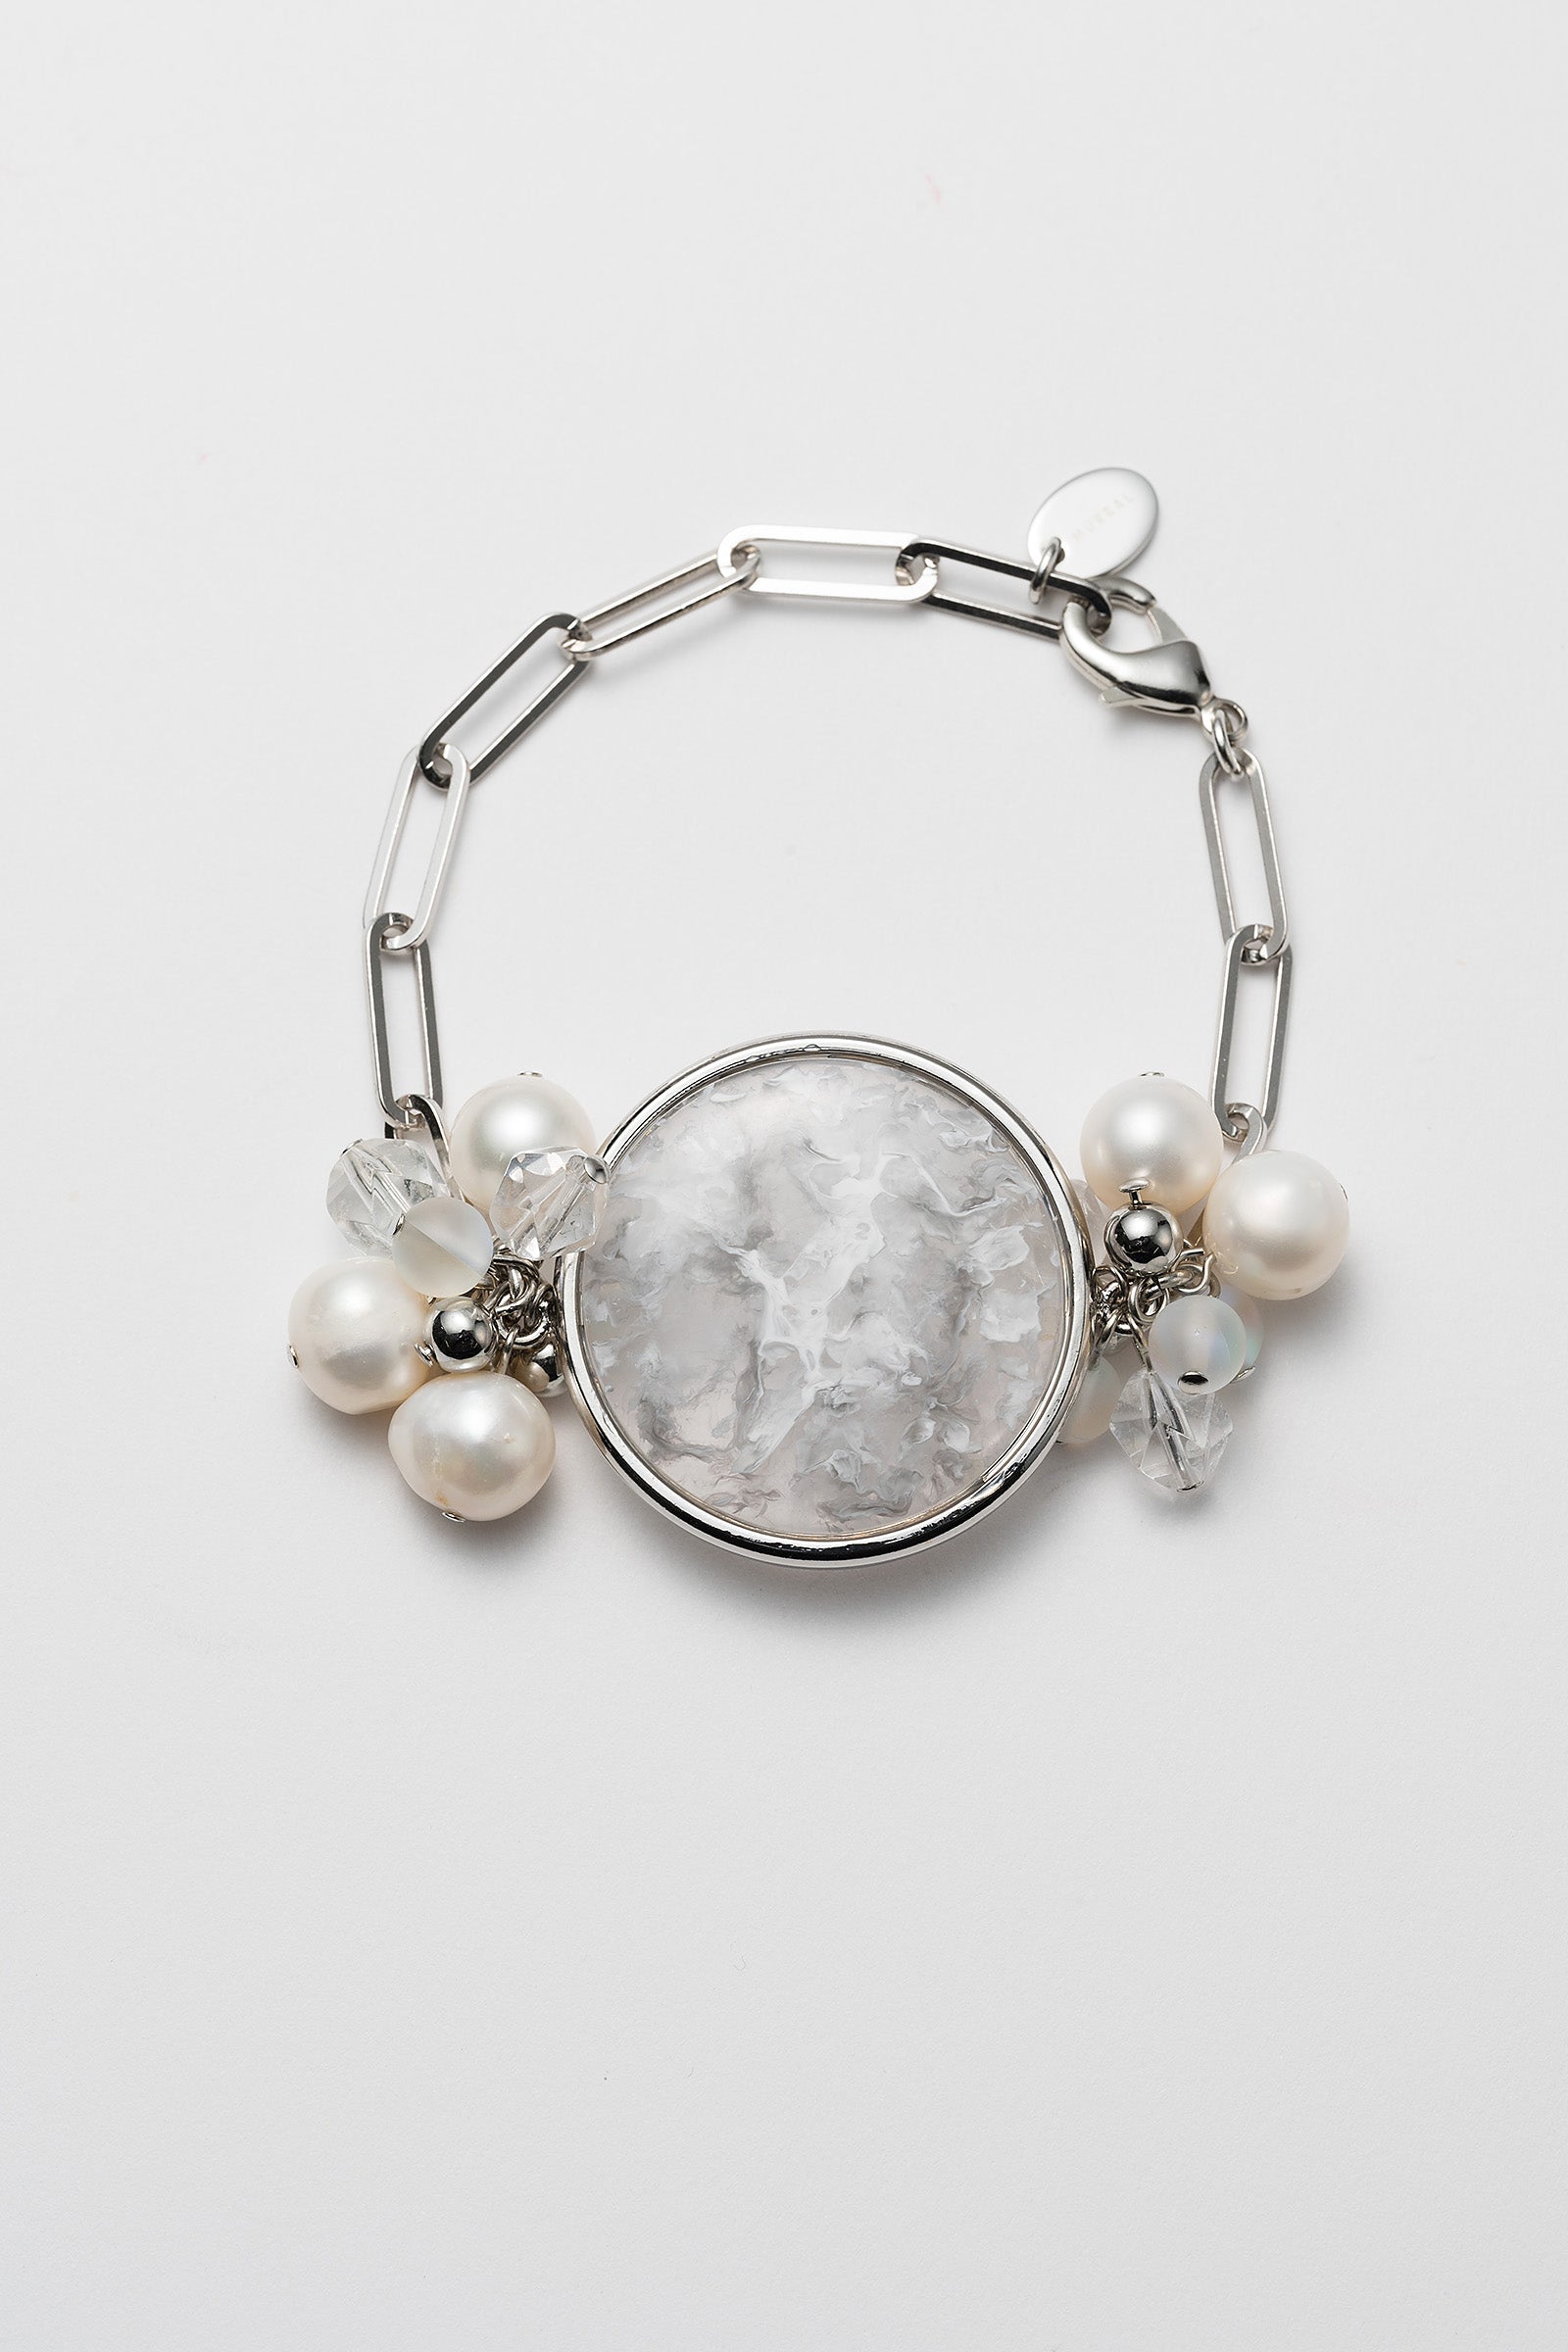 Snow cover bracelet (Silver)